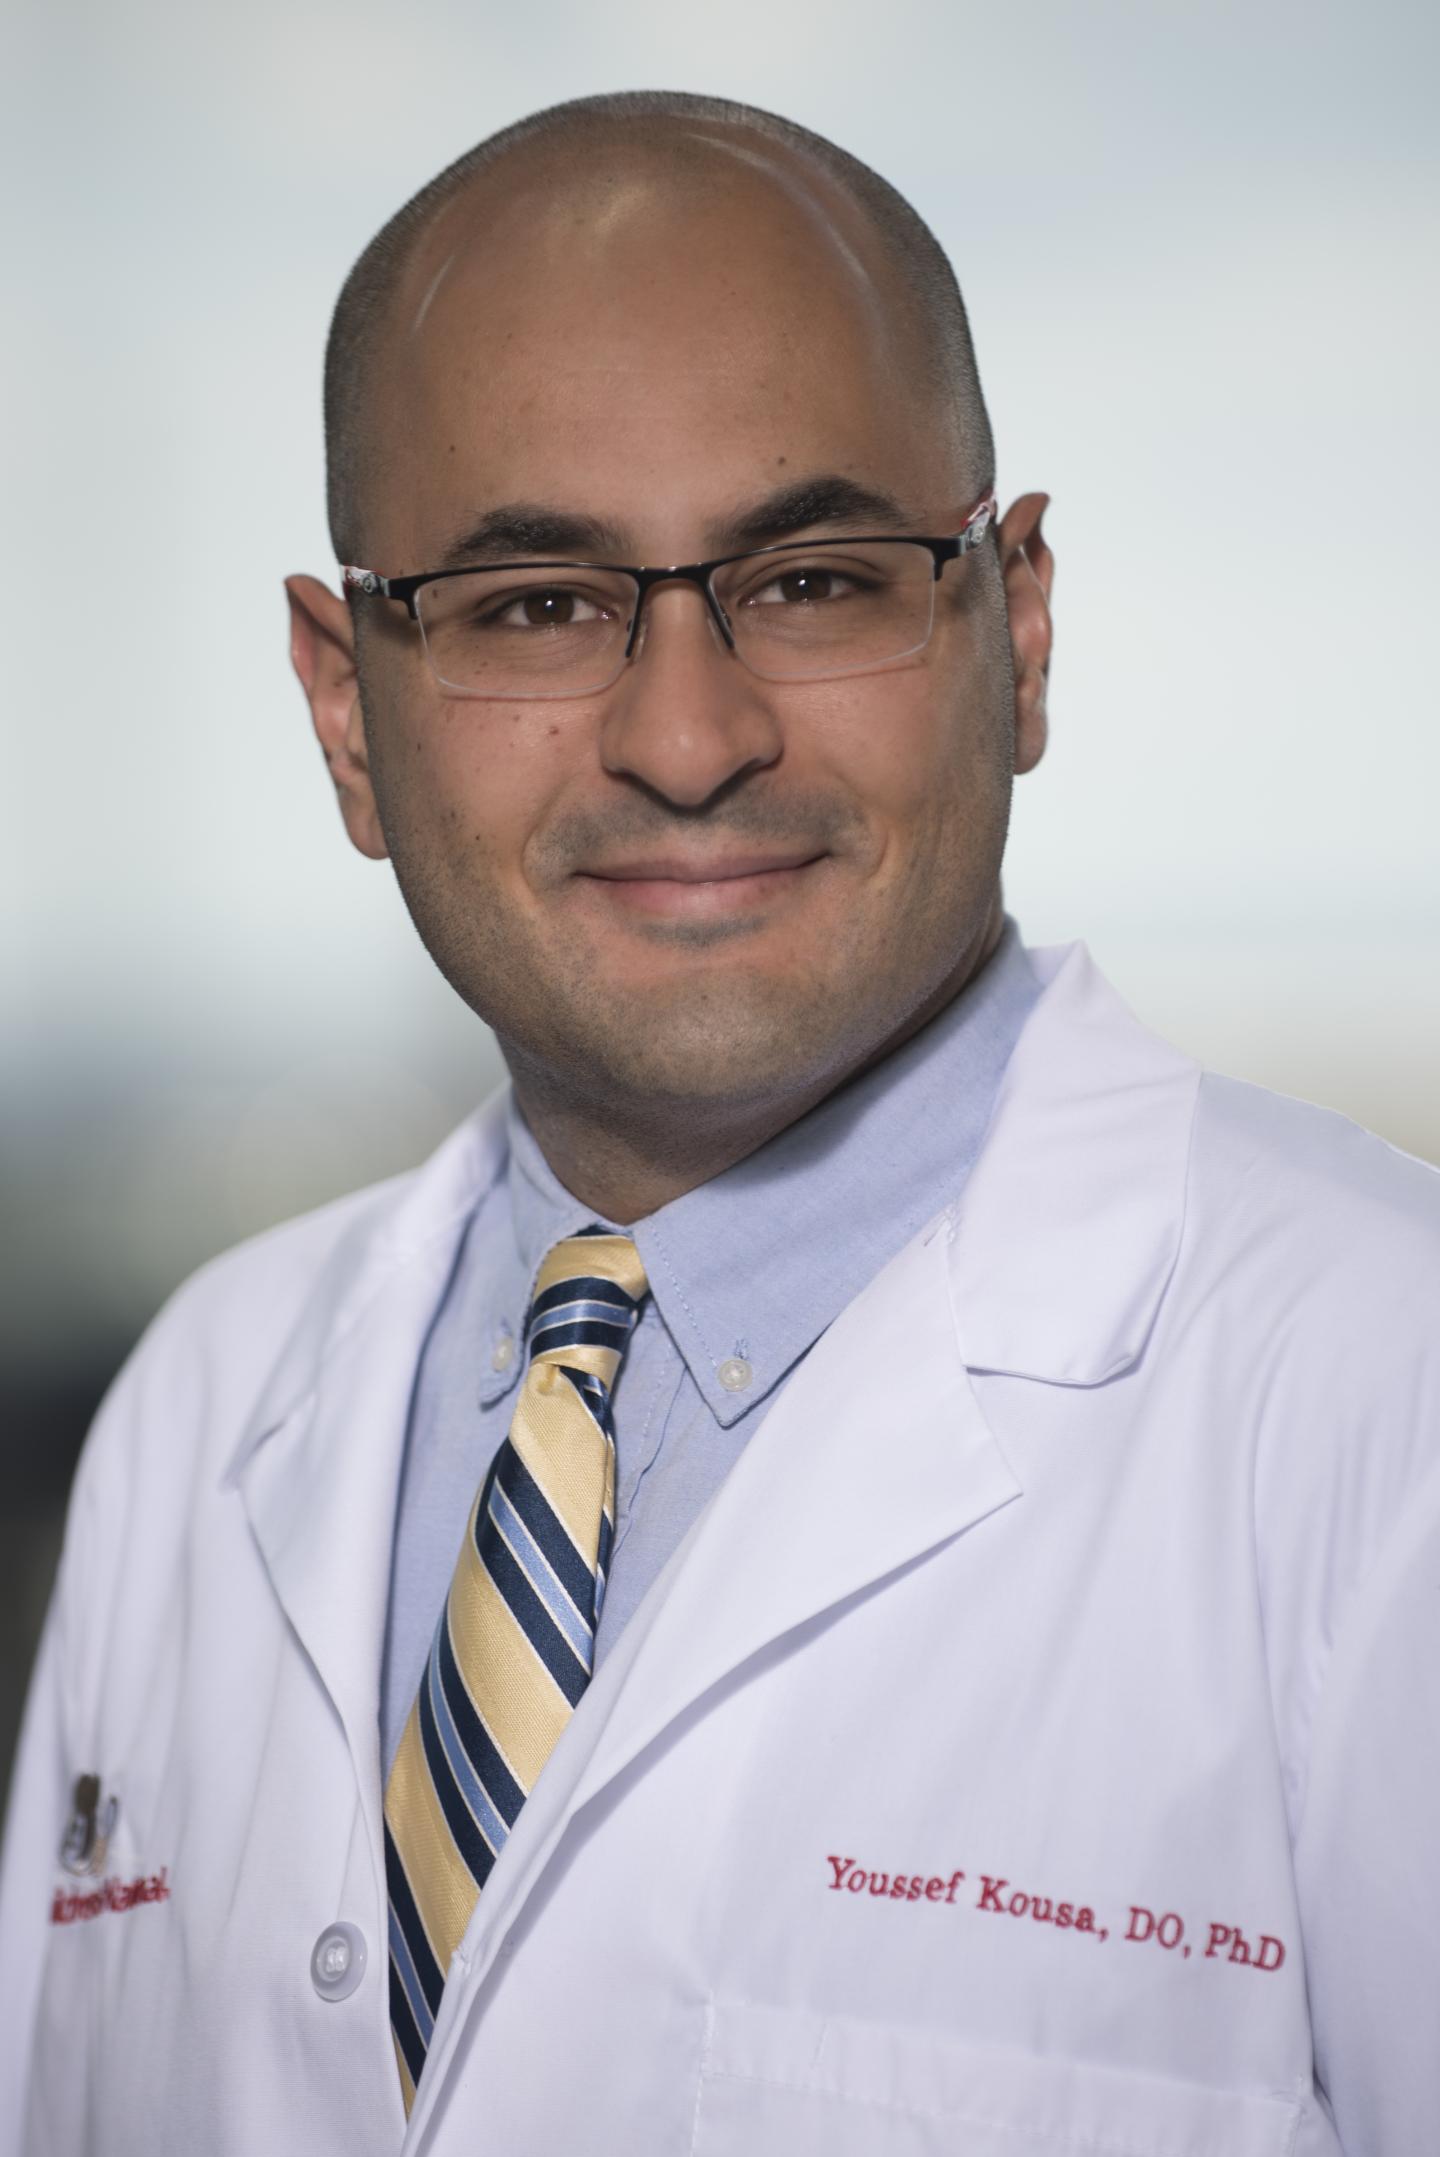 Youssef A. Kousa, M.S., D.O., Ph.D., Children's National Health System 